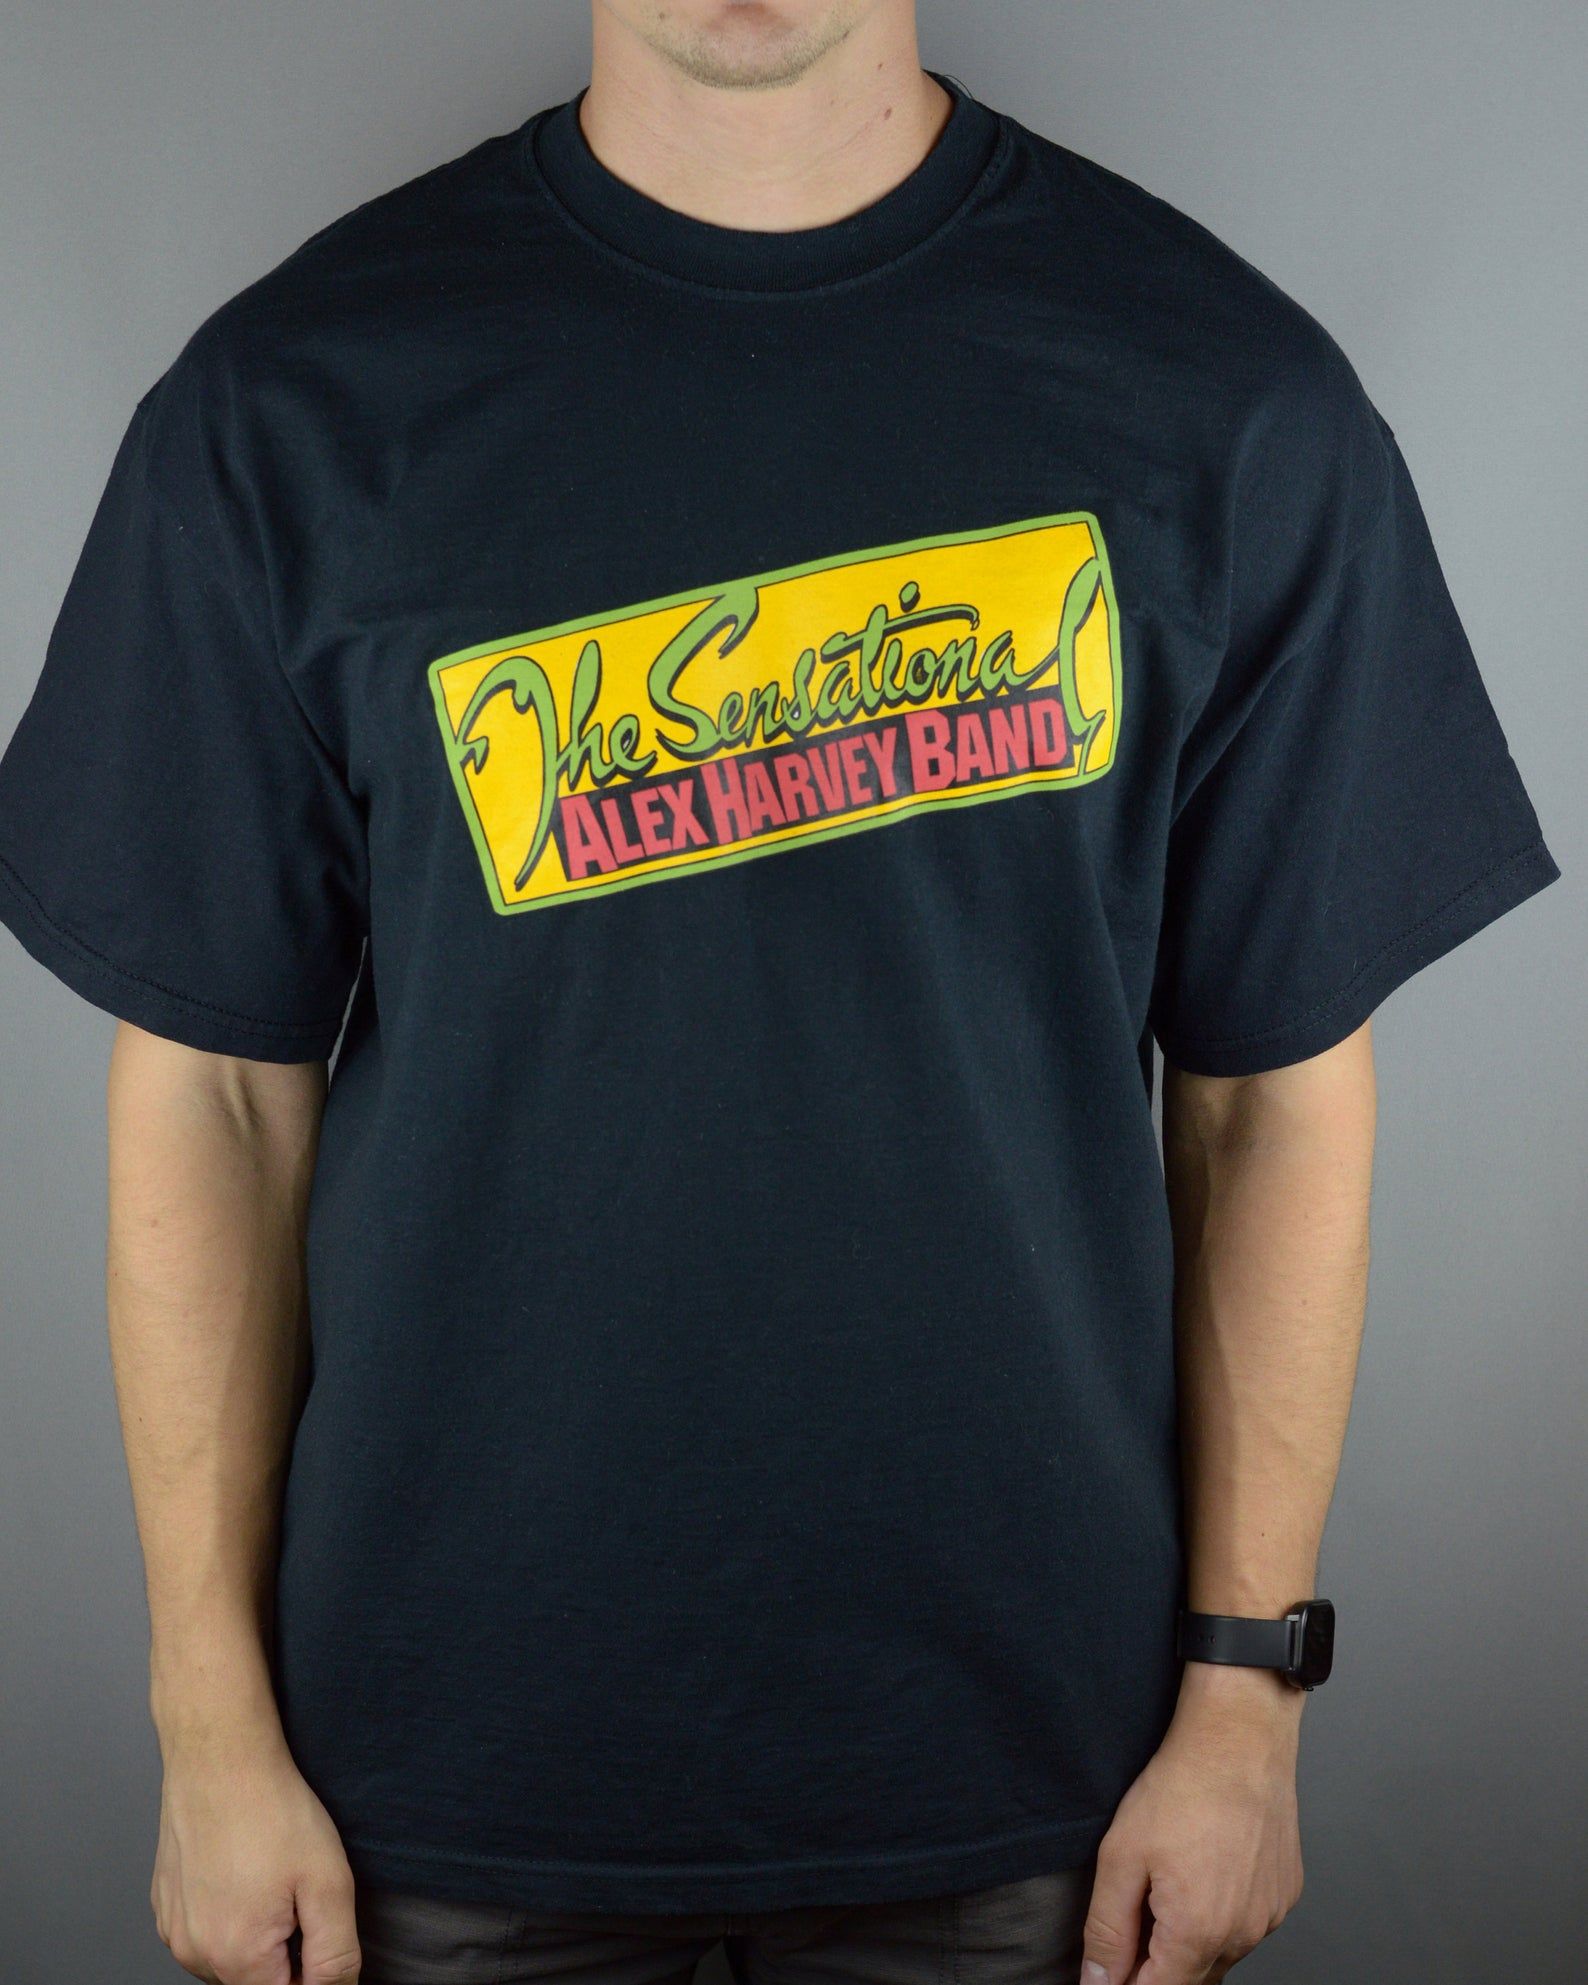 Vintage The Sensational Alex Harvey Band T Shirt - Vintagetee90